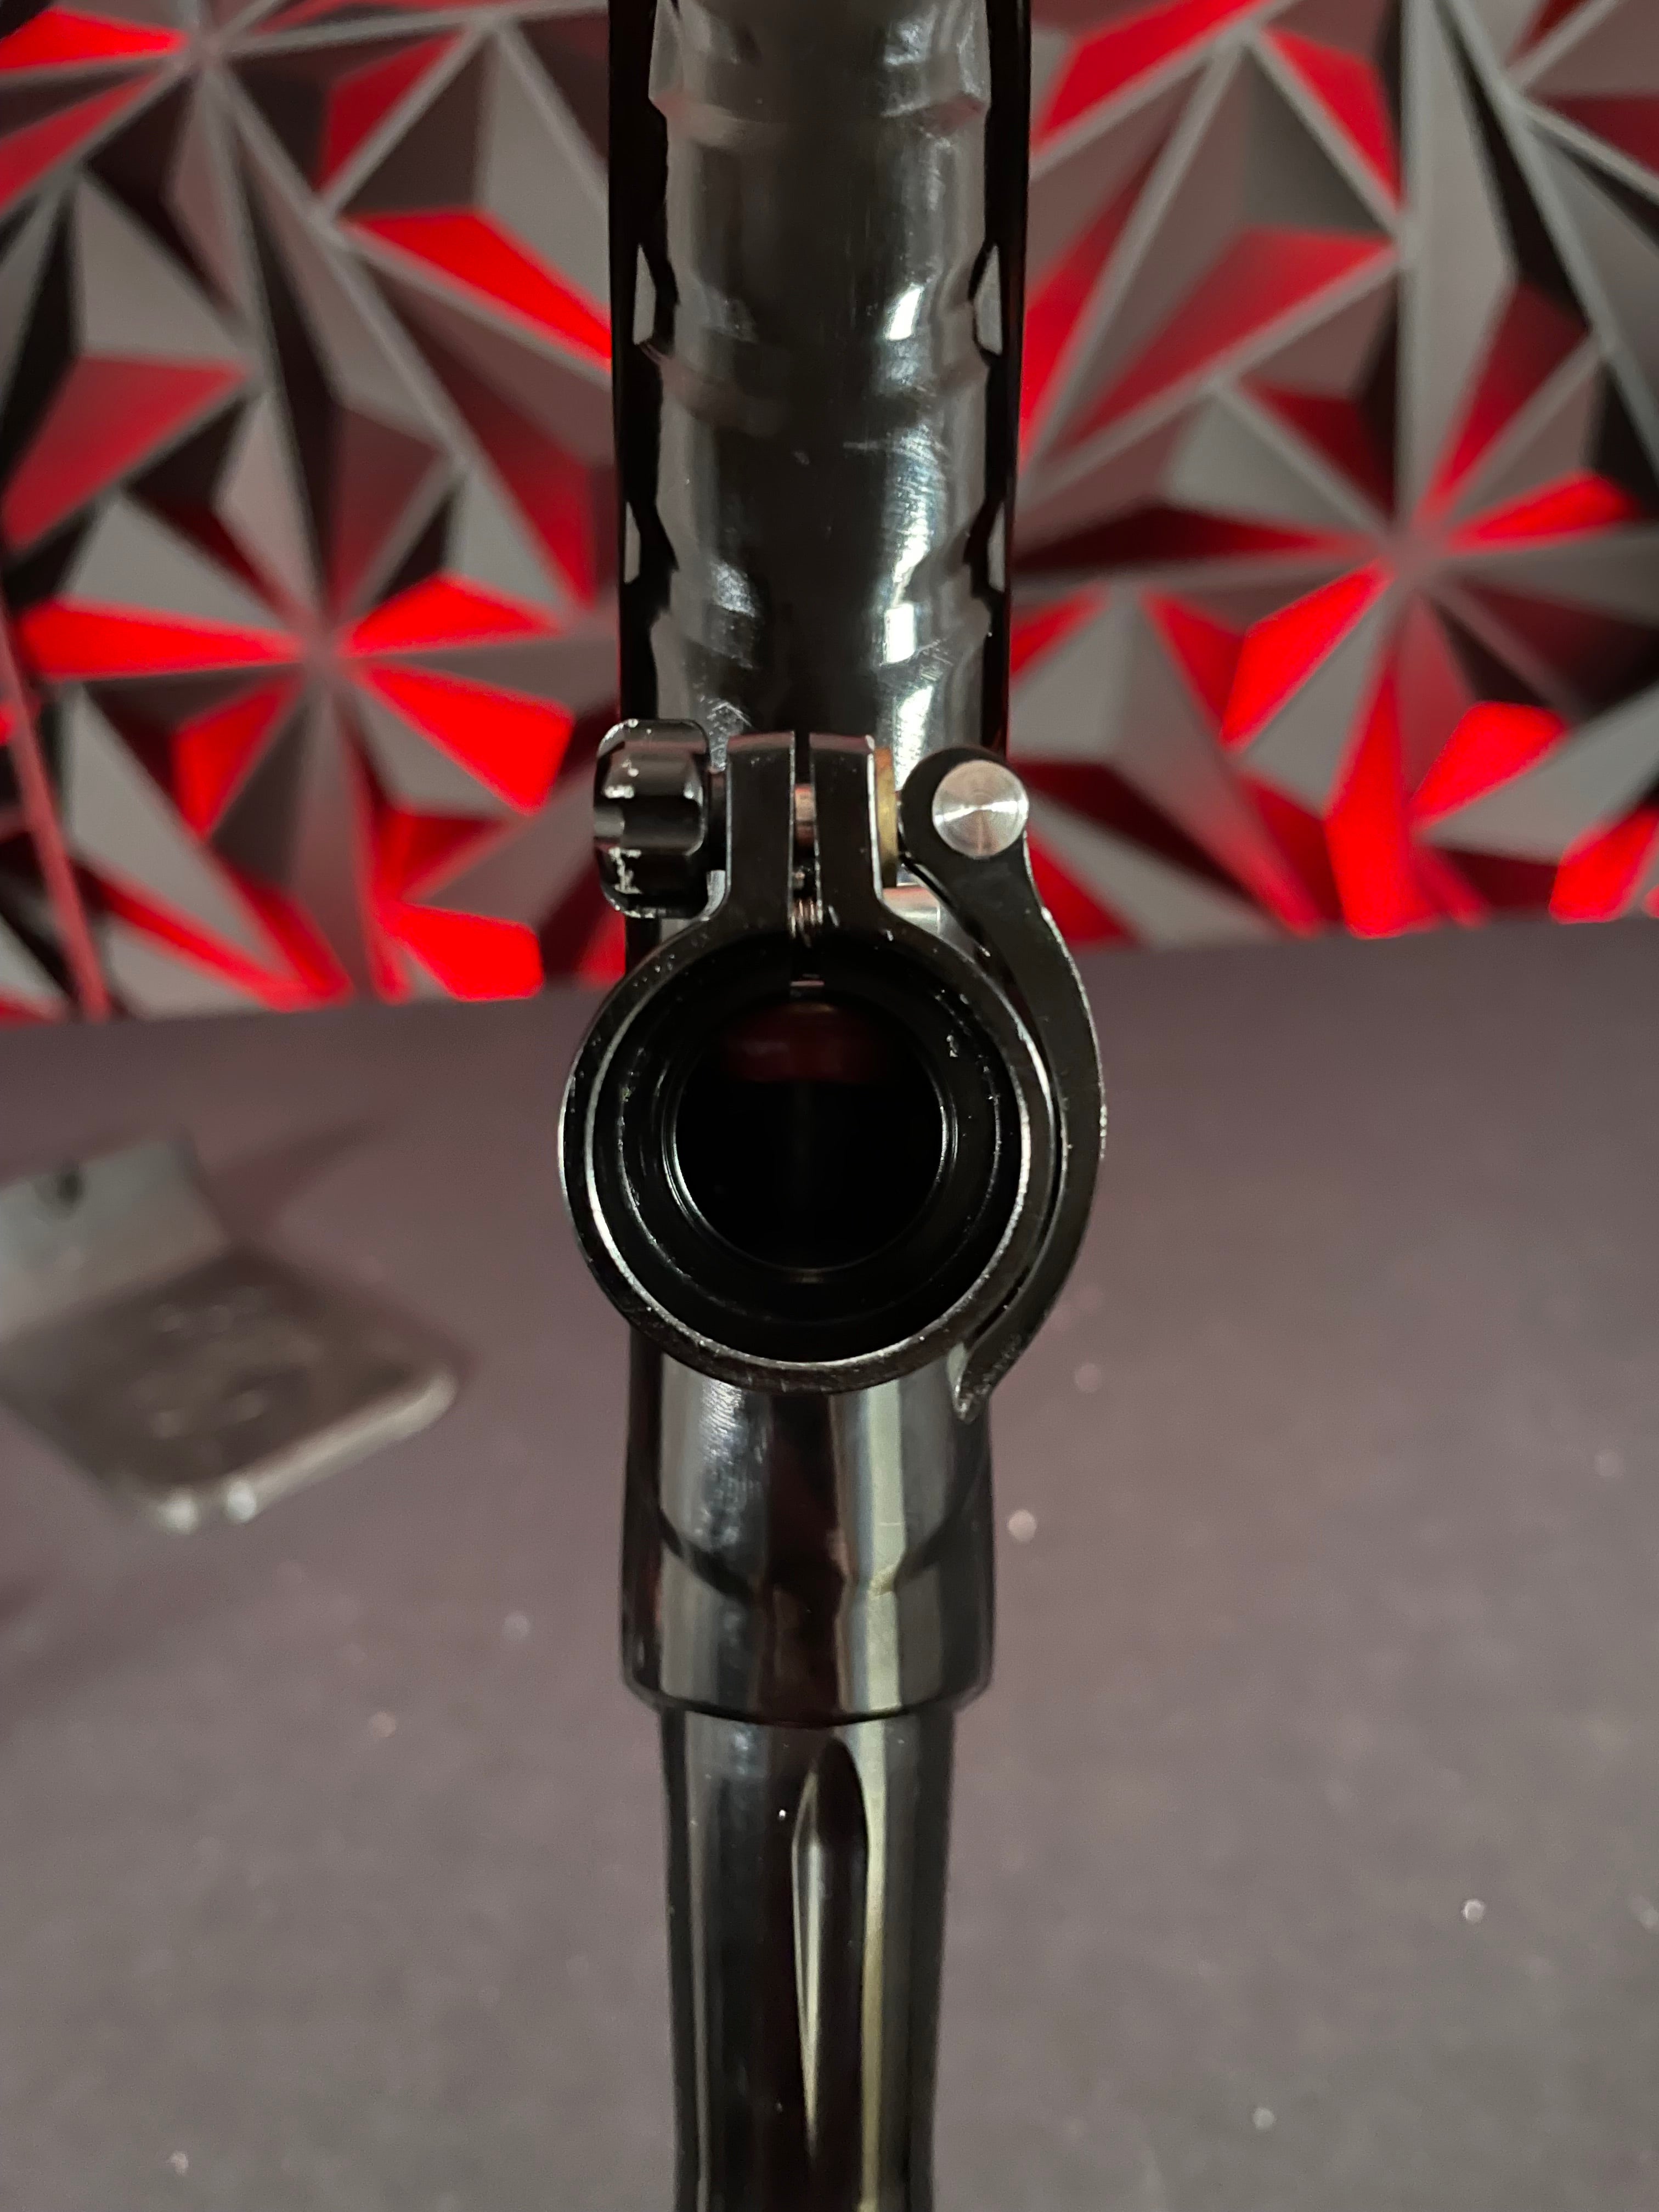 Used MacDev Prime XTS Paintball Gun - Gloss Black